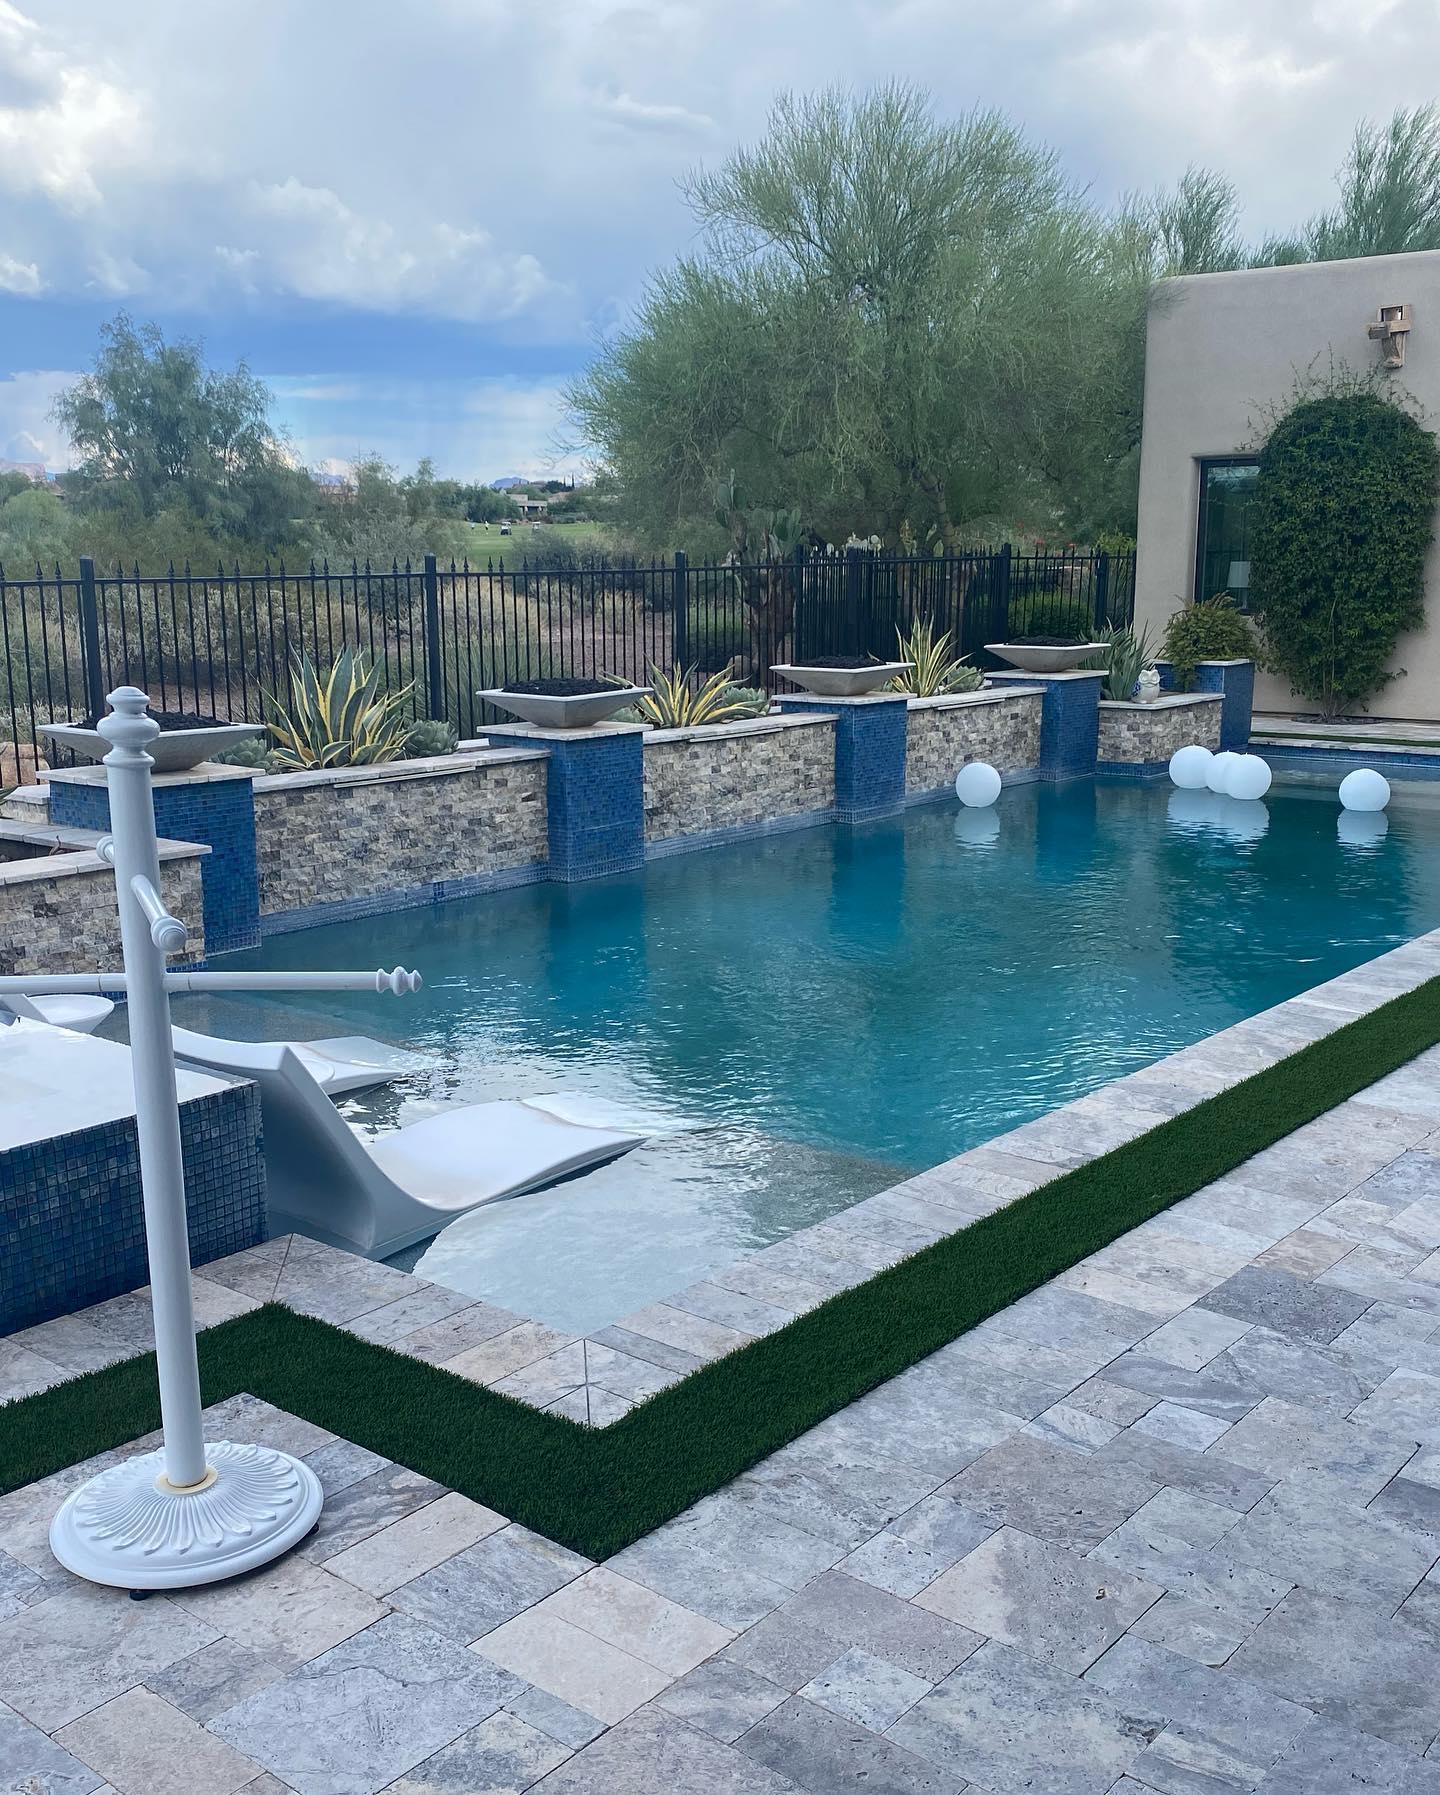 Peoria, AZ custom pool and spa builder No Limit Pools & Spas Mesa (602)421-9379